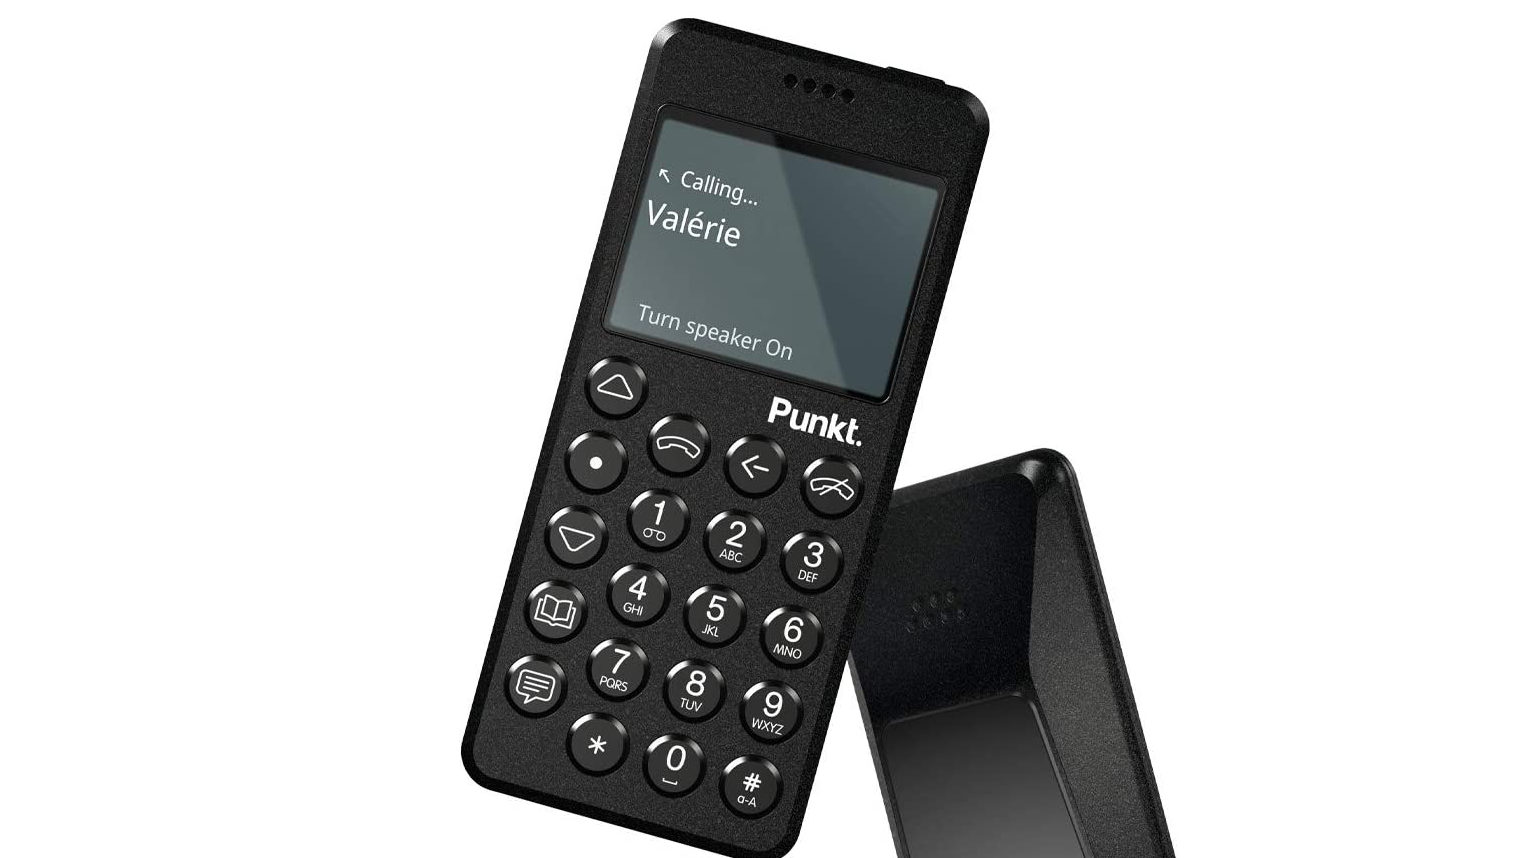 Punkt MP02 - The best phones for seniors